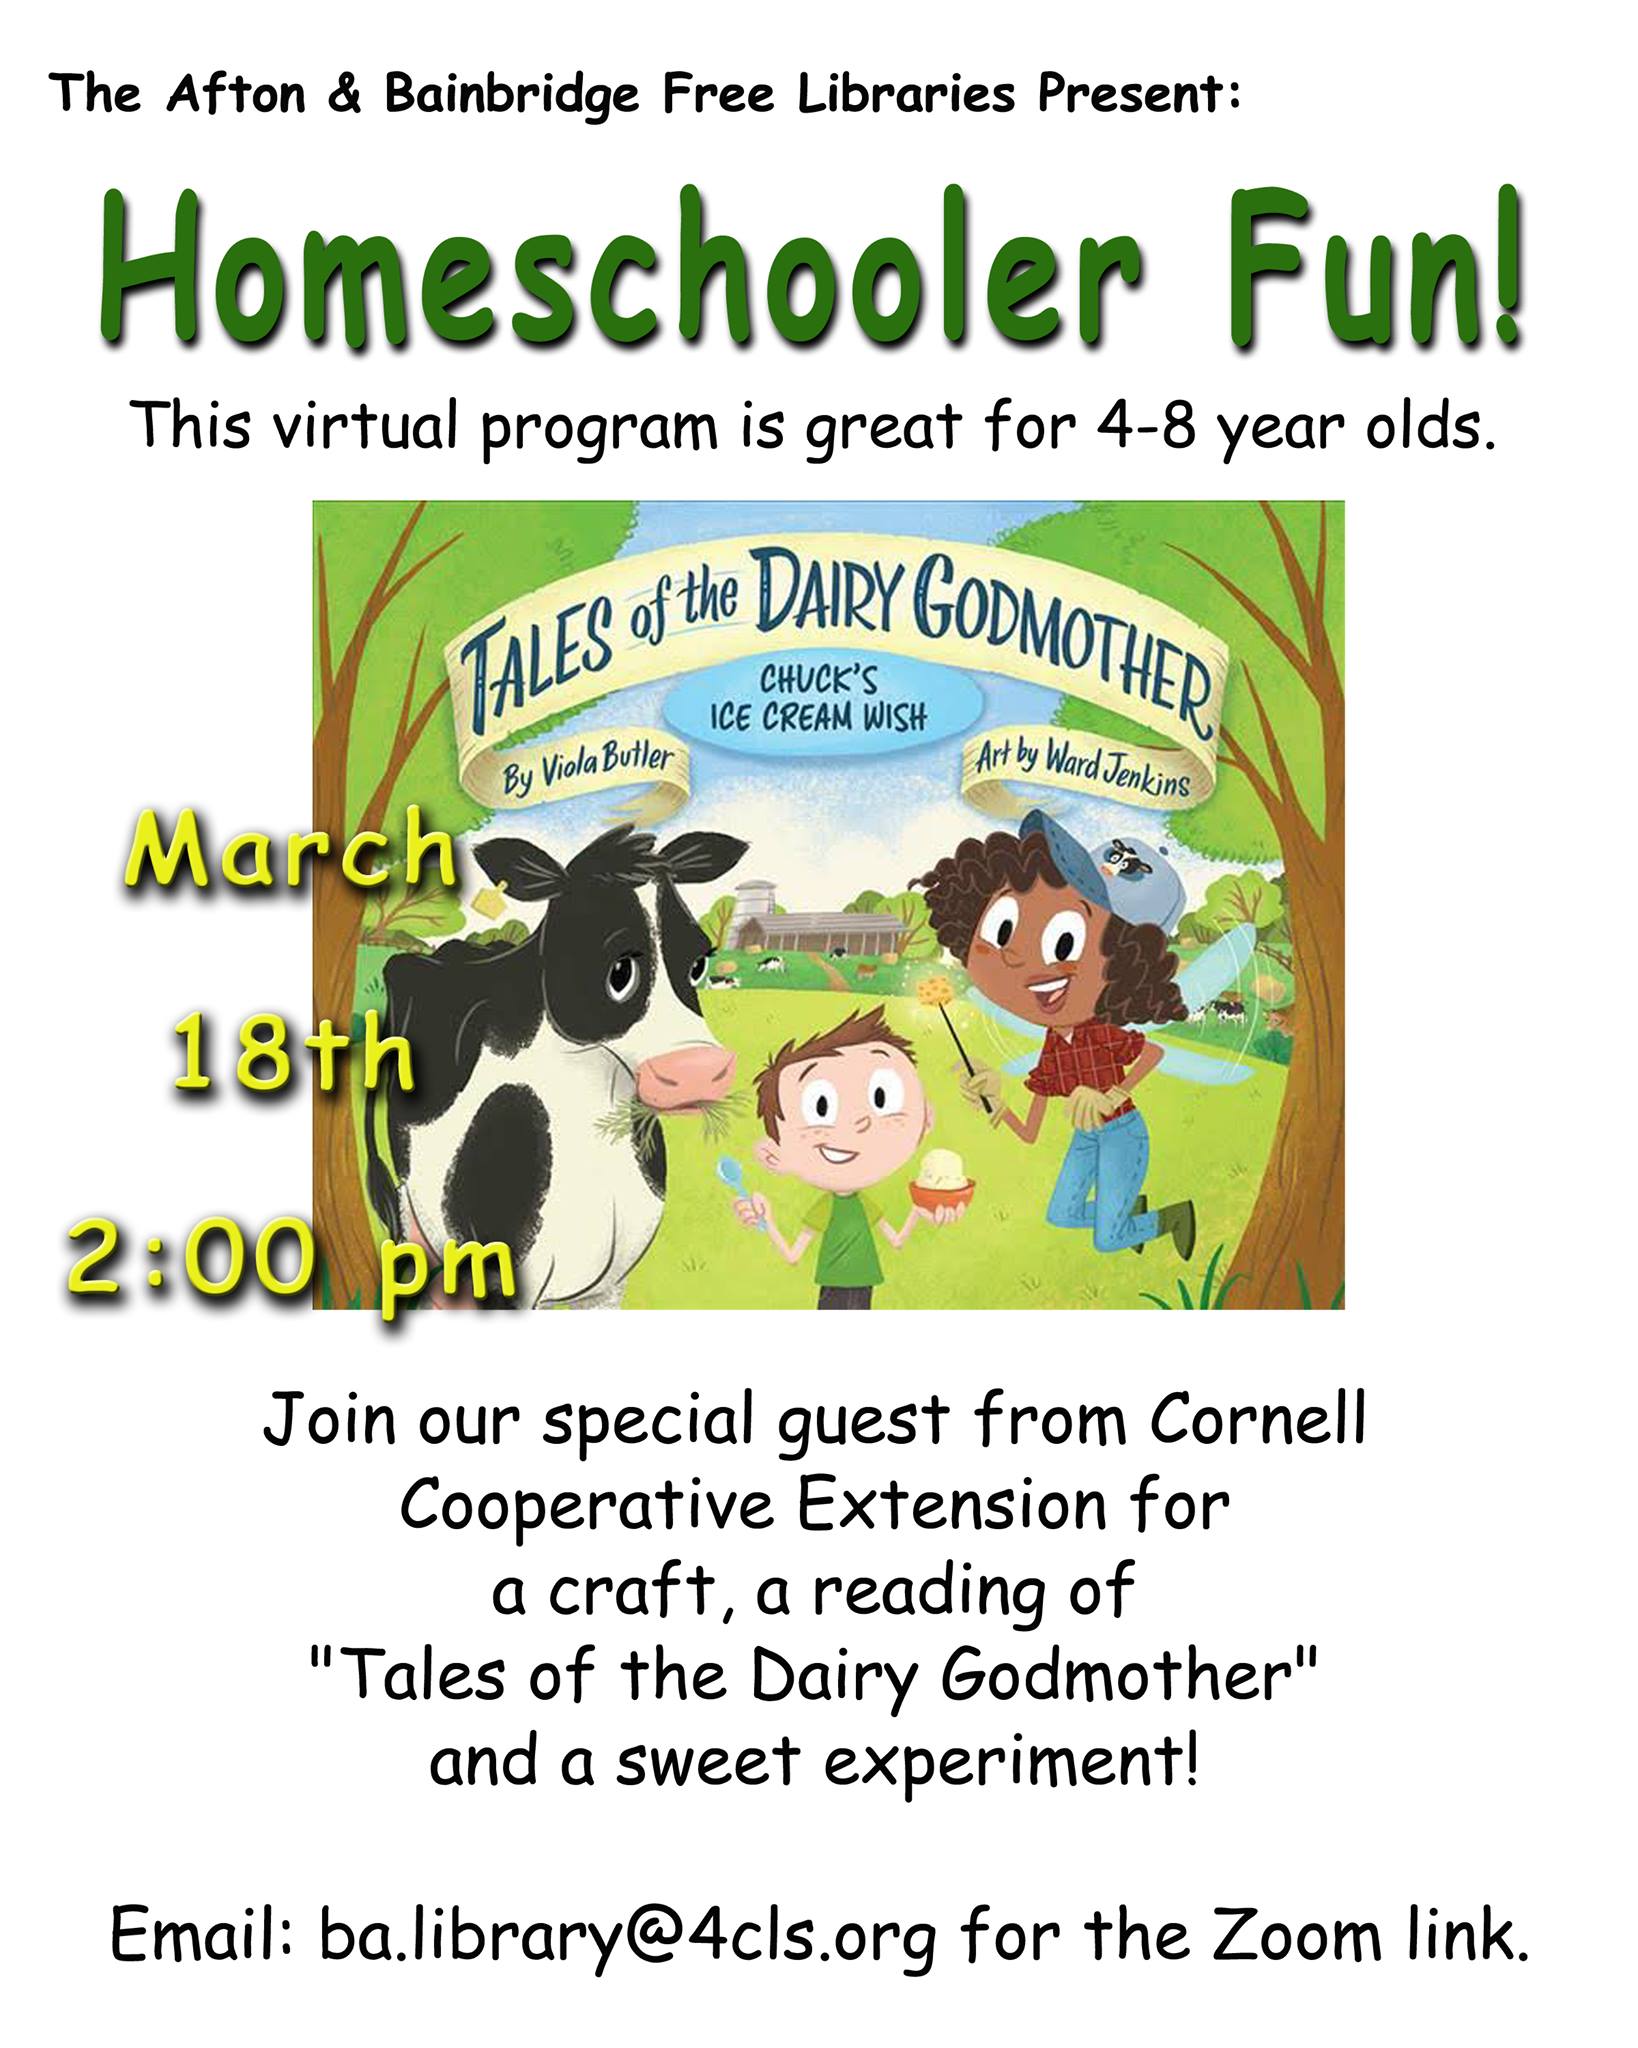 Homeschooler Fun! – March 18